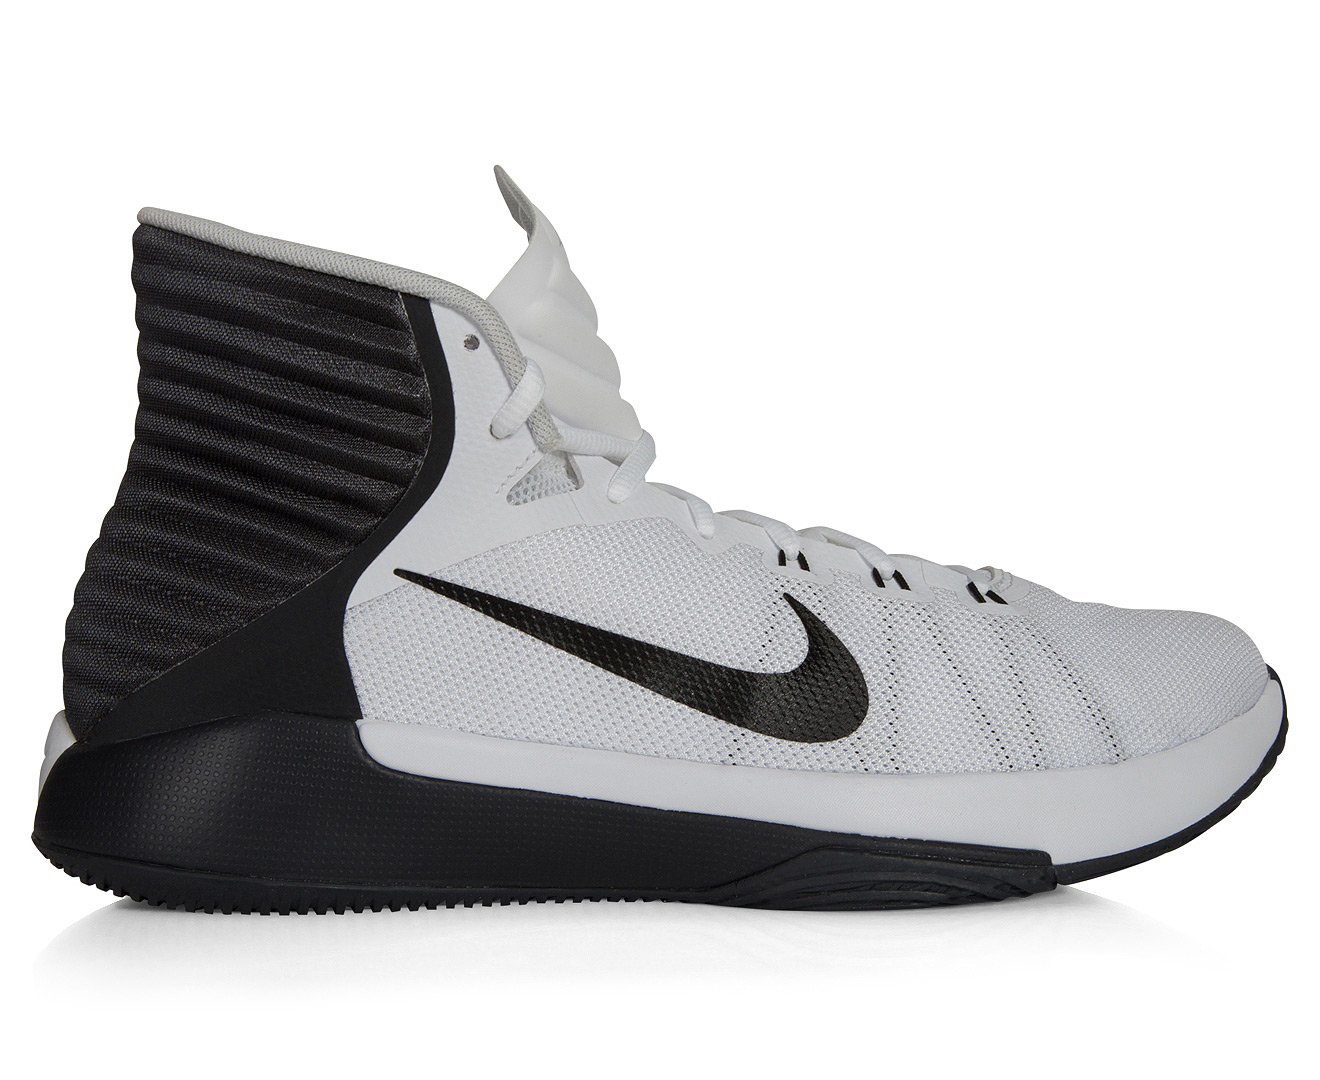 Nike Men's Prime Hype DF 2016 Basketball Shoe - White/Black/Anthracite/Pure Platinum